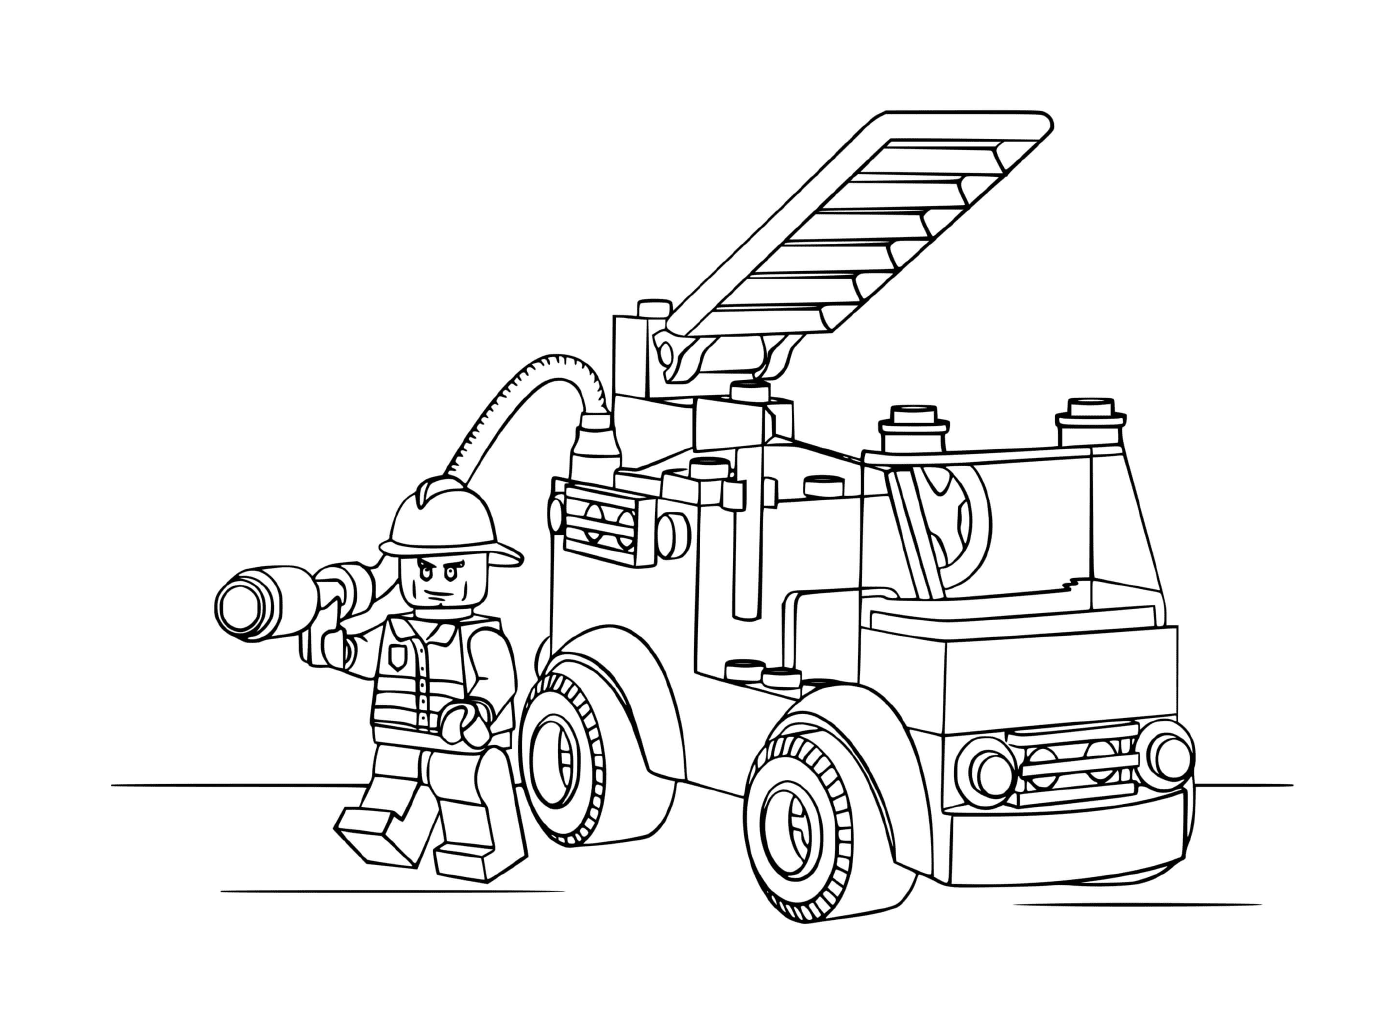  a Lego fire truck and a fireman 